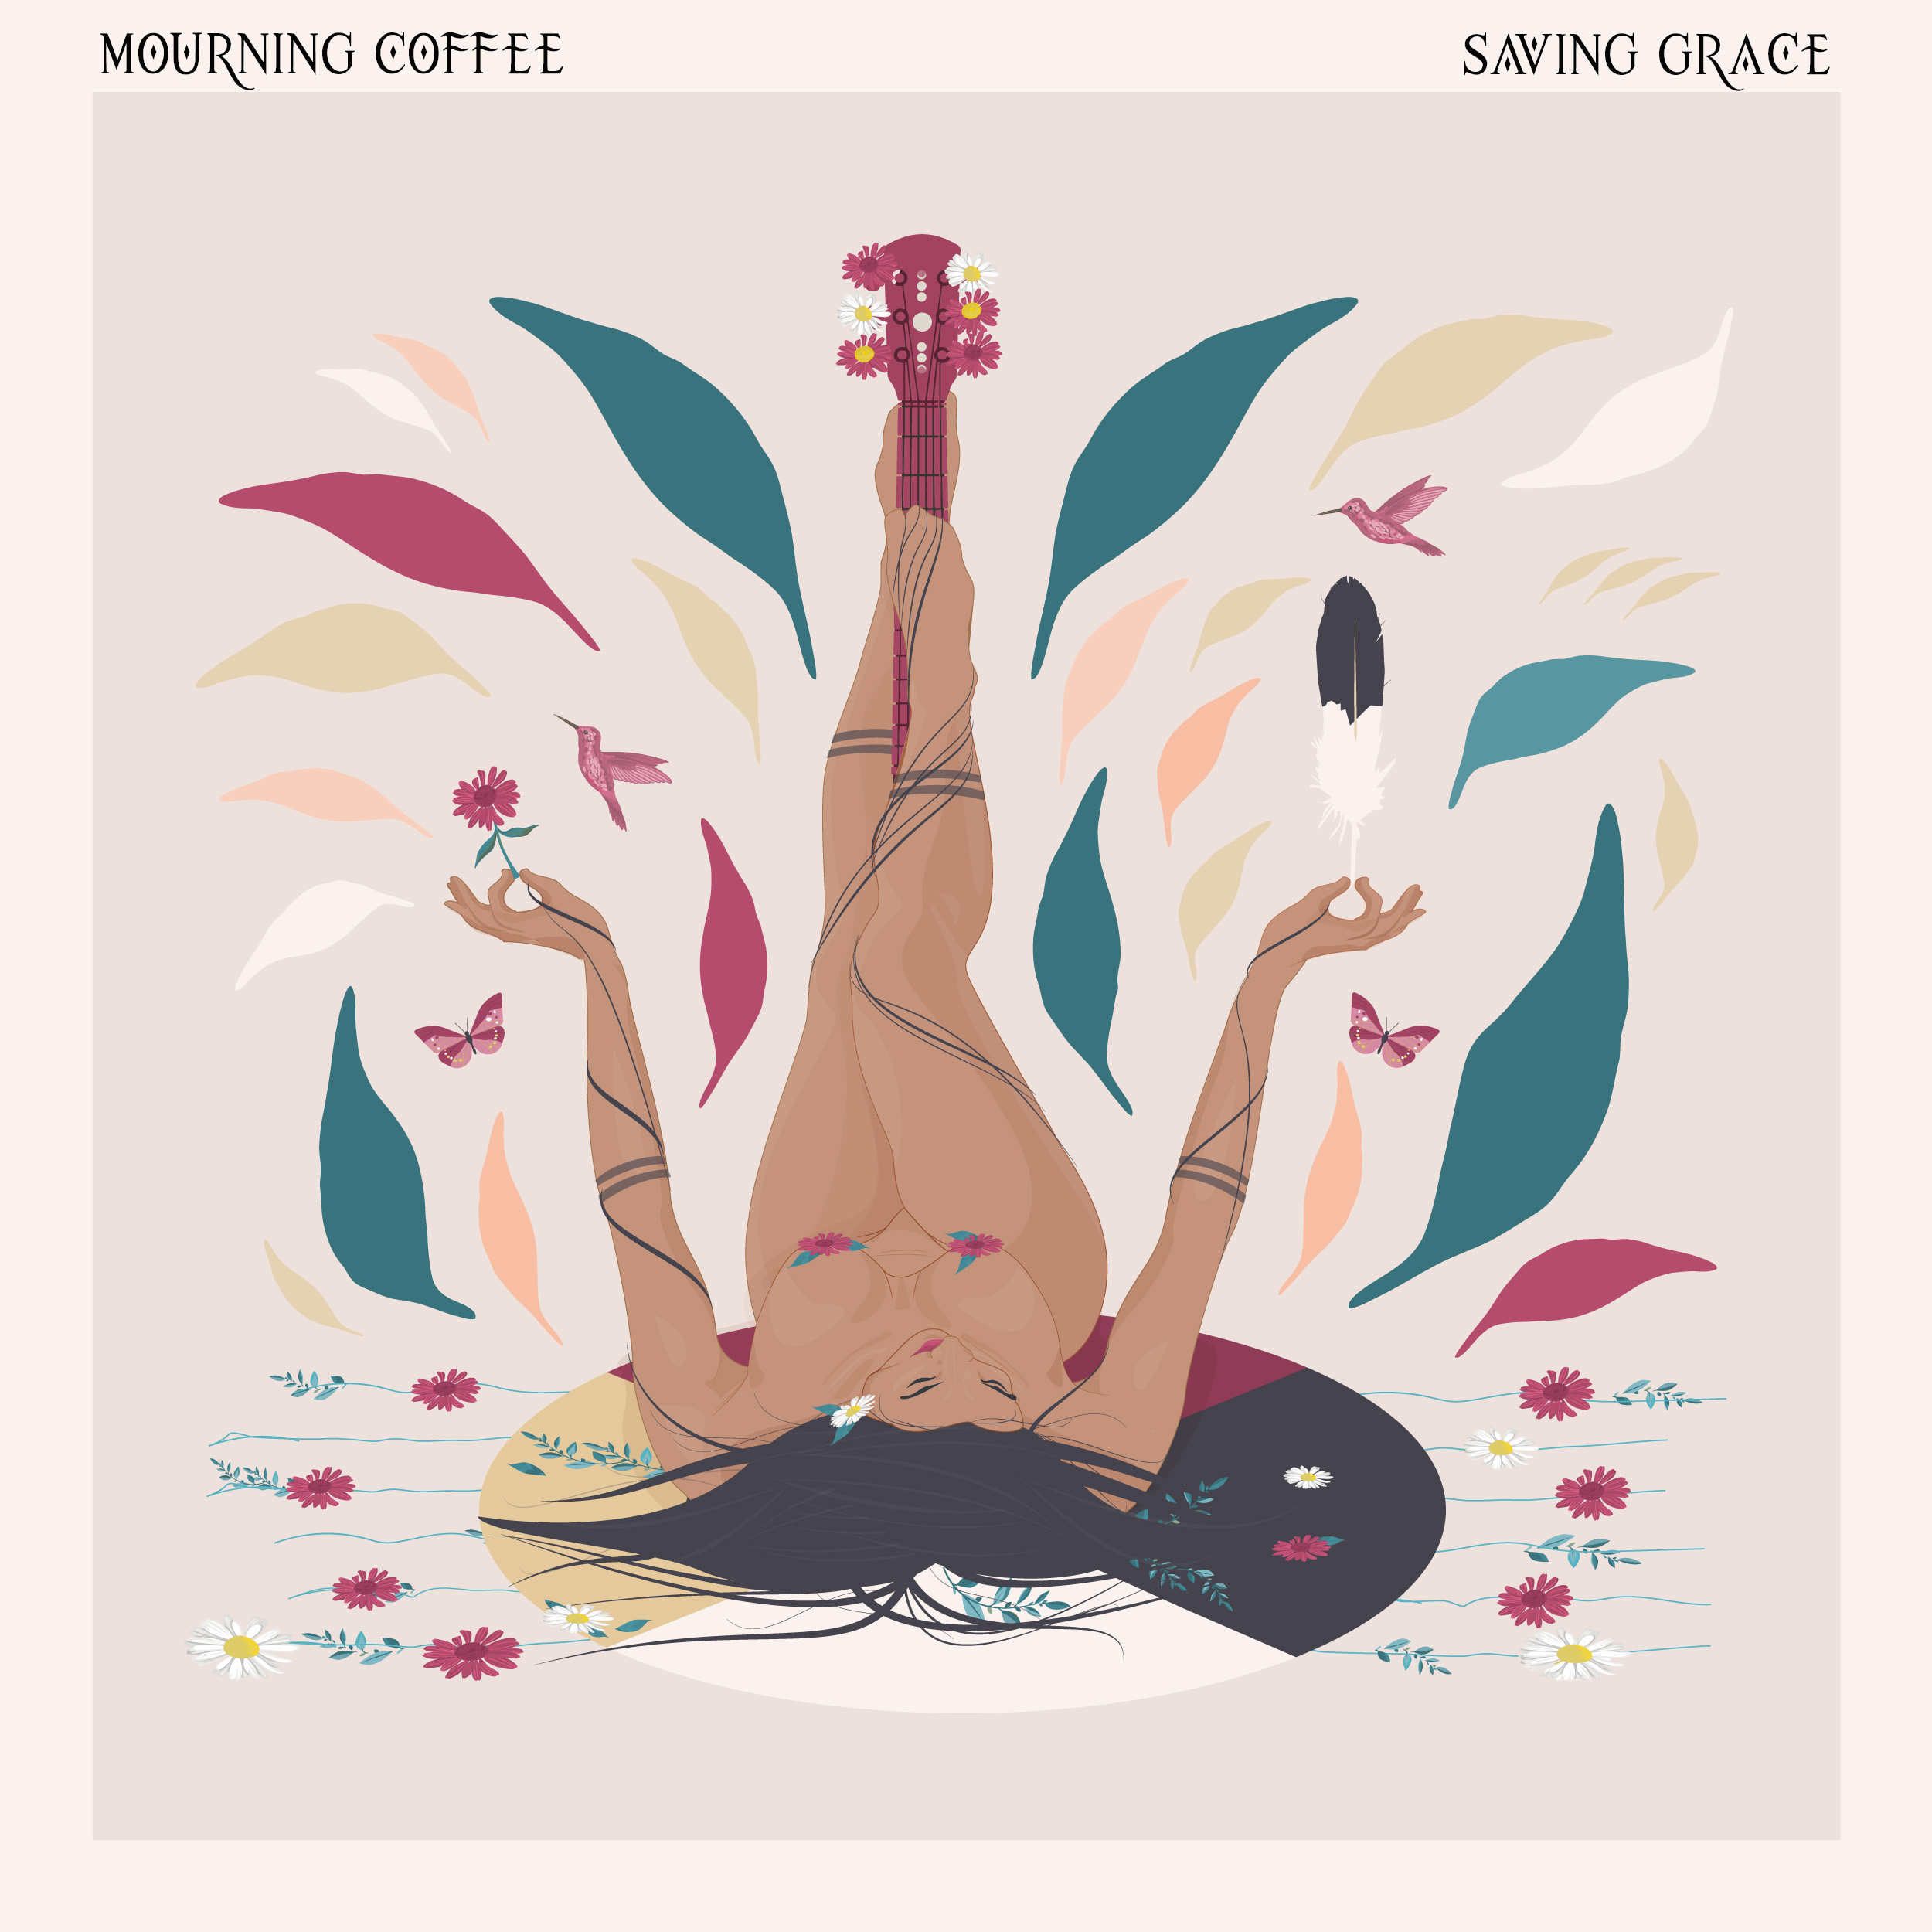 Mourning Coffee ‘Saving Grace’ album artwork